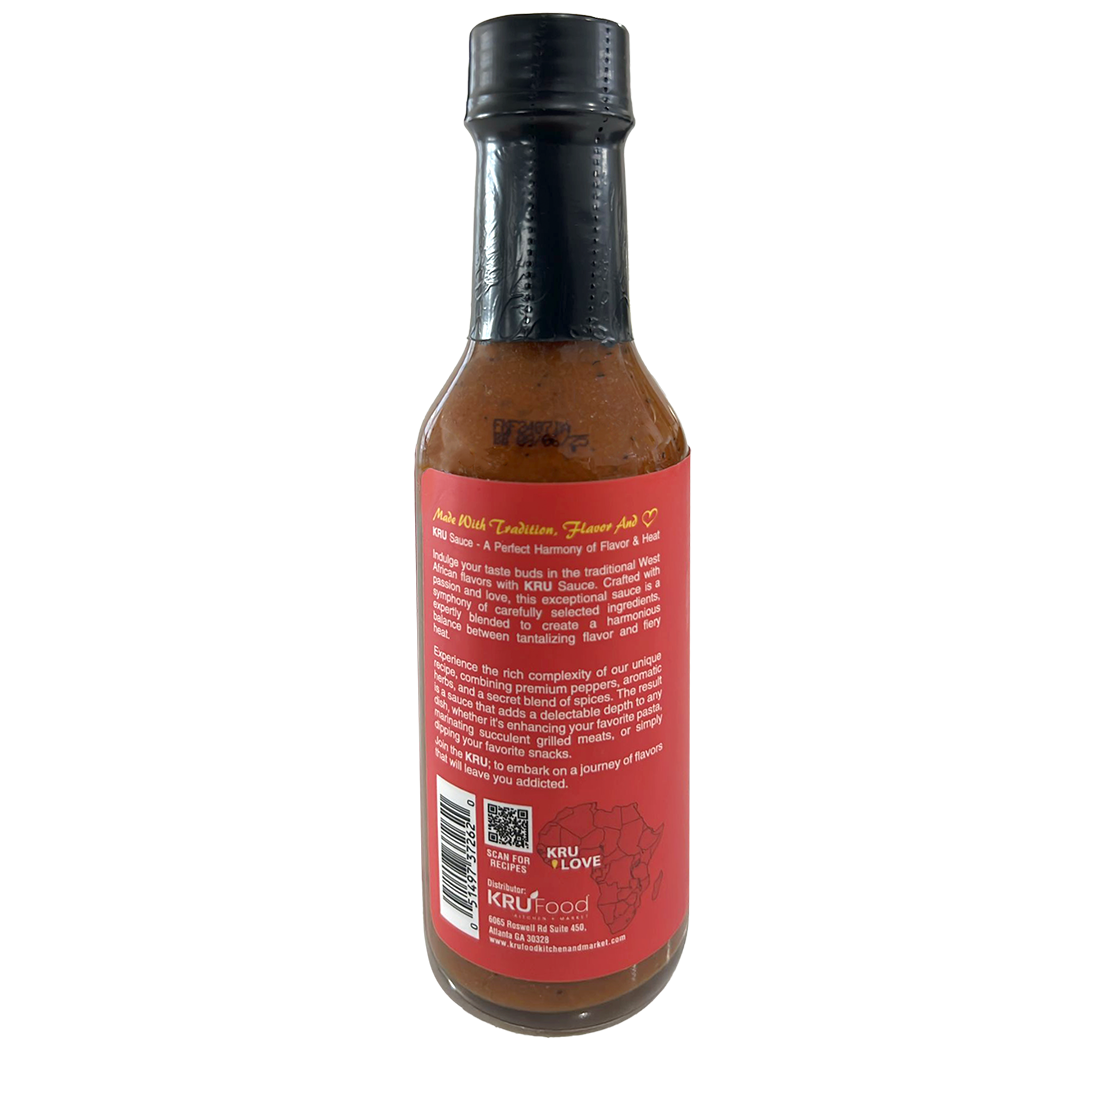 The "Fiery" Plant-based KRU Sauce